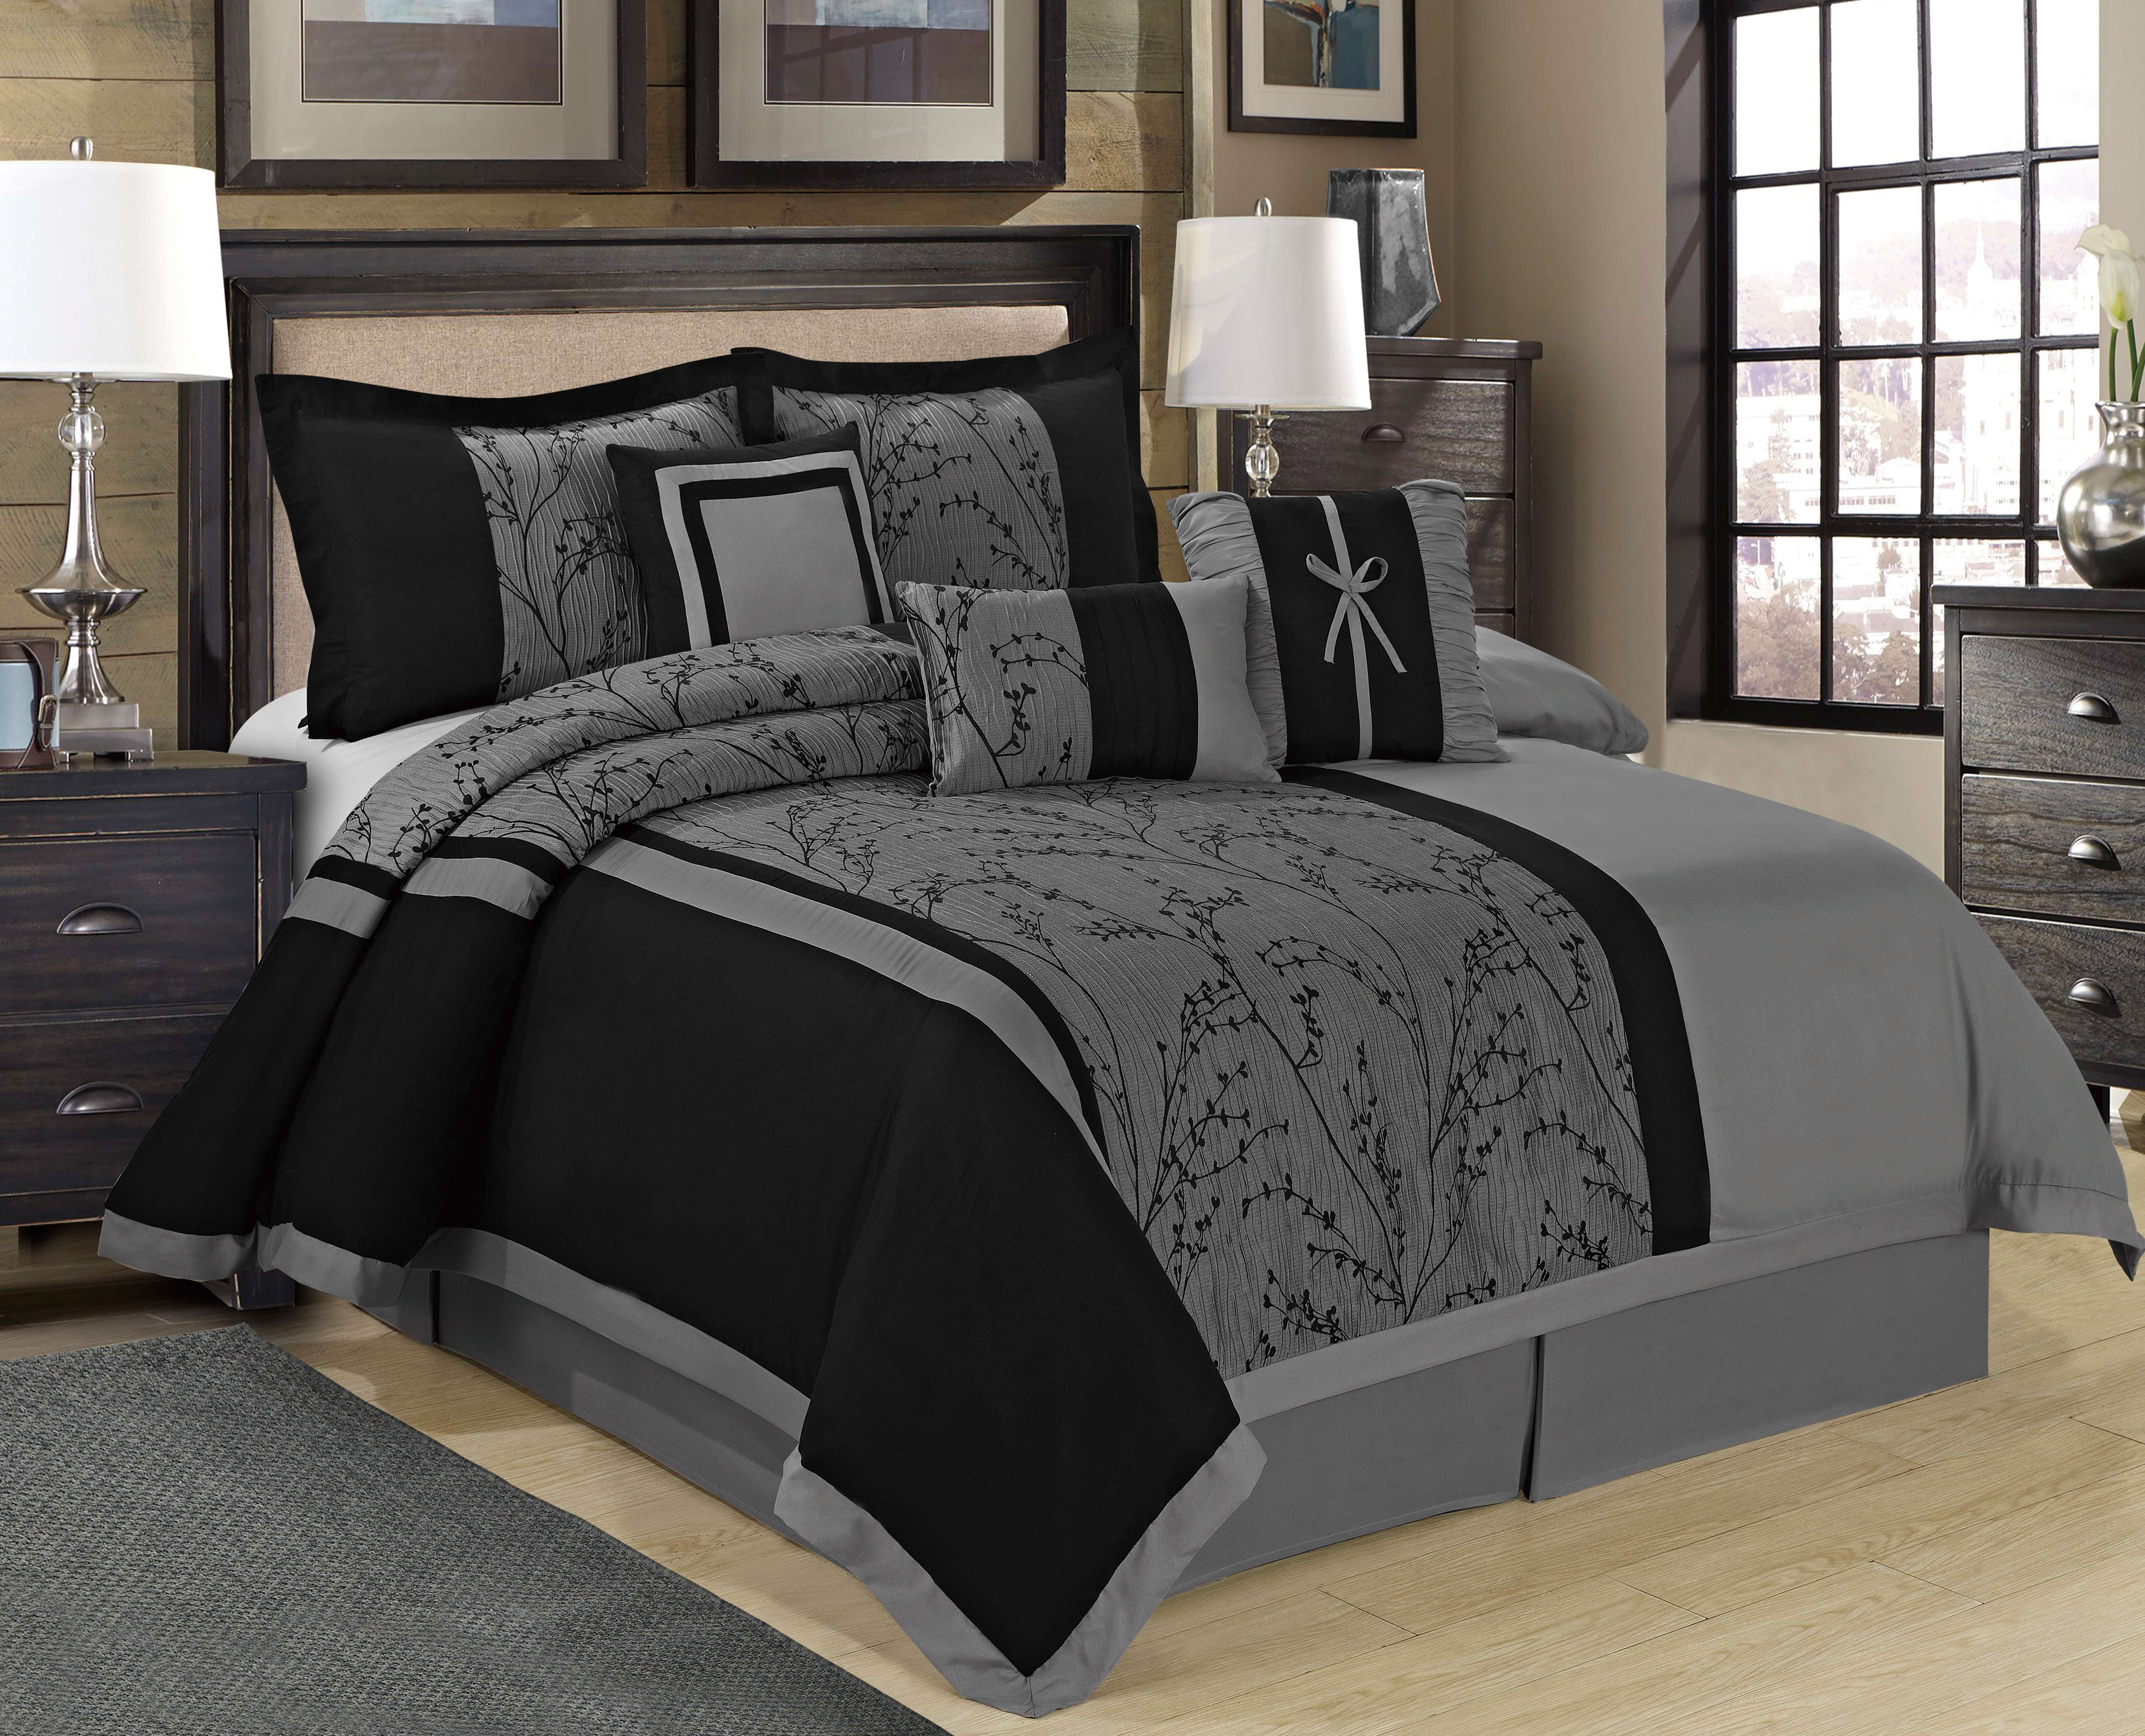 King Size Gray Comforter Set - How To Blog